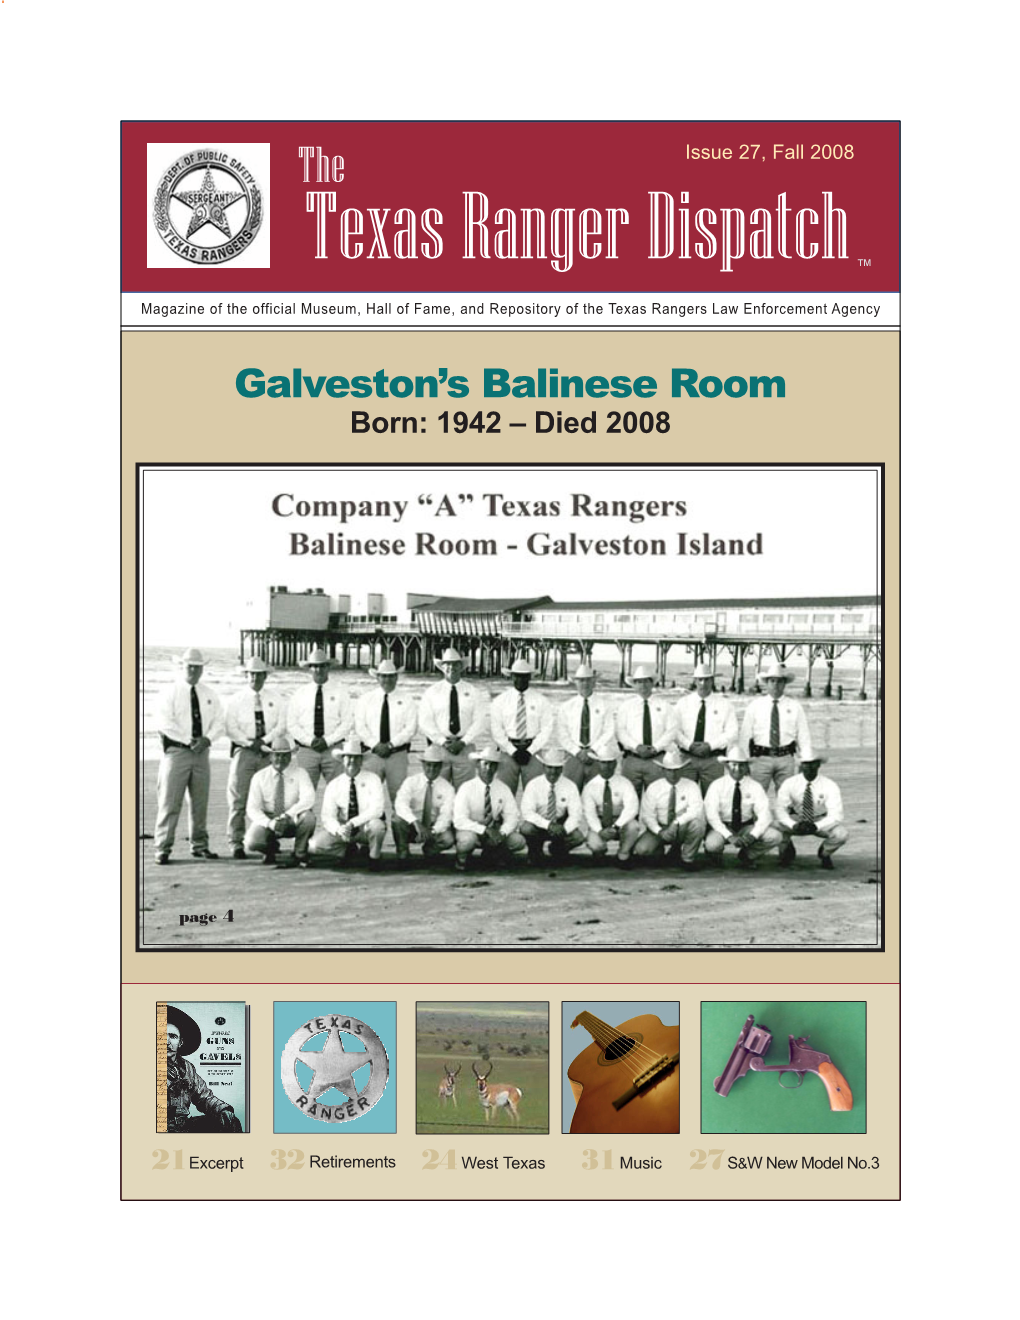 Texas Ranger Dispatch ™